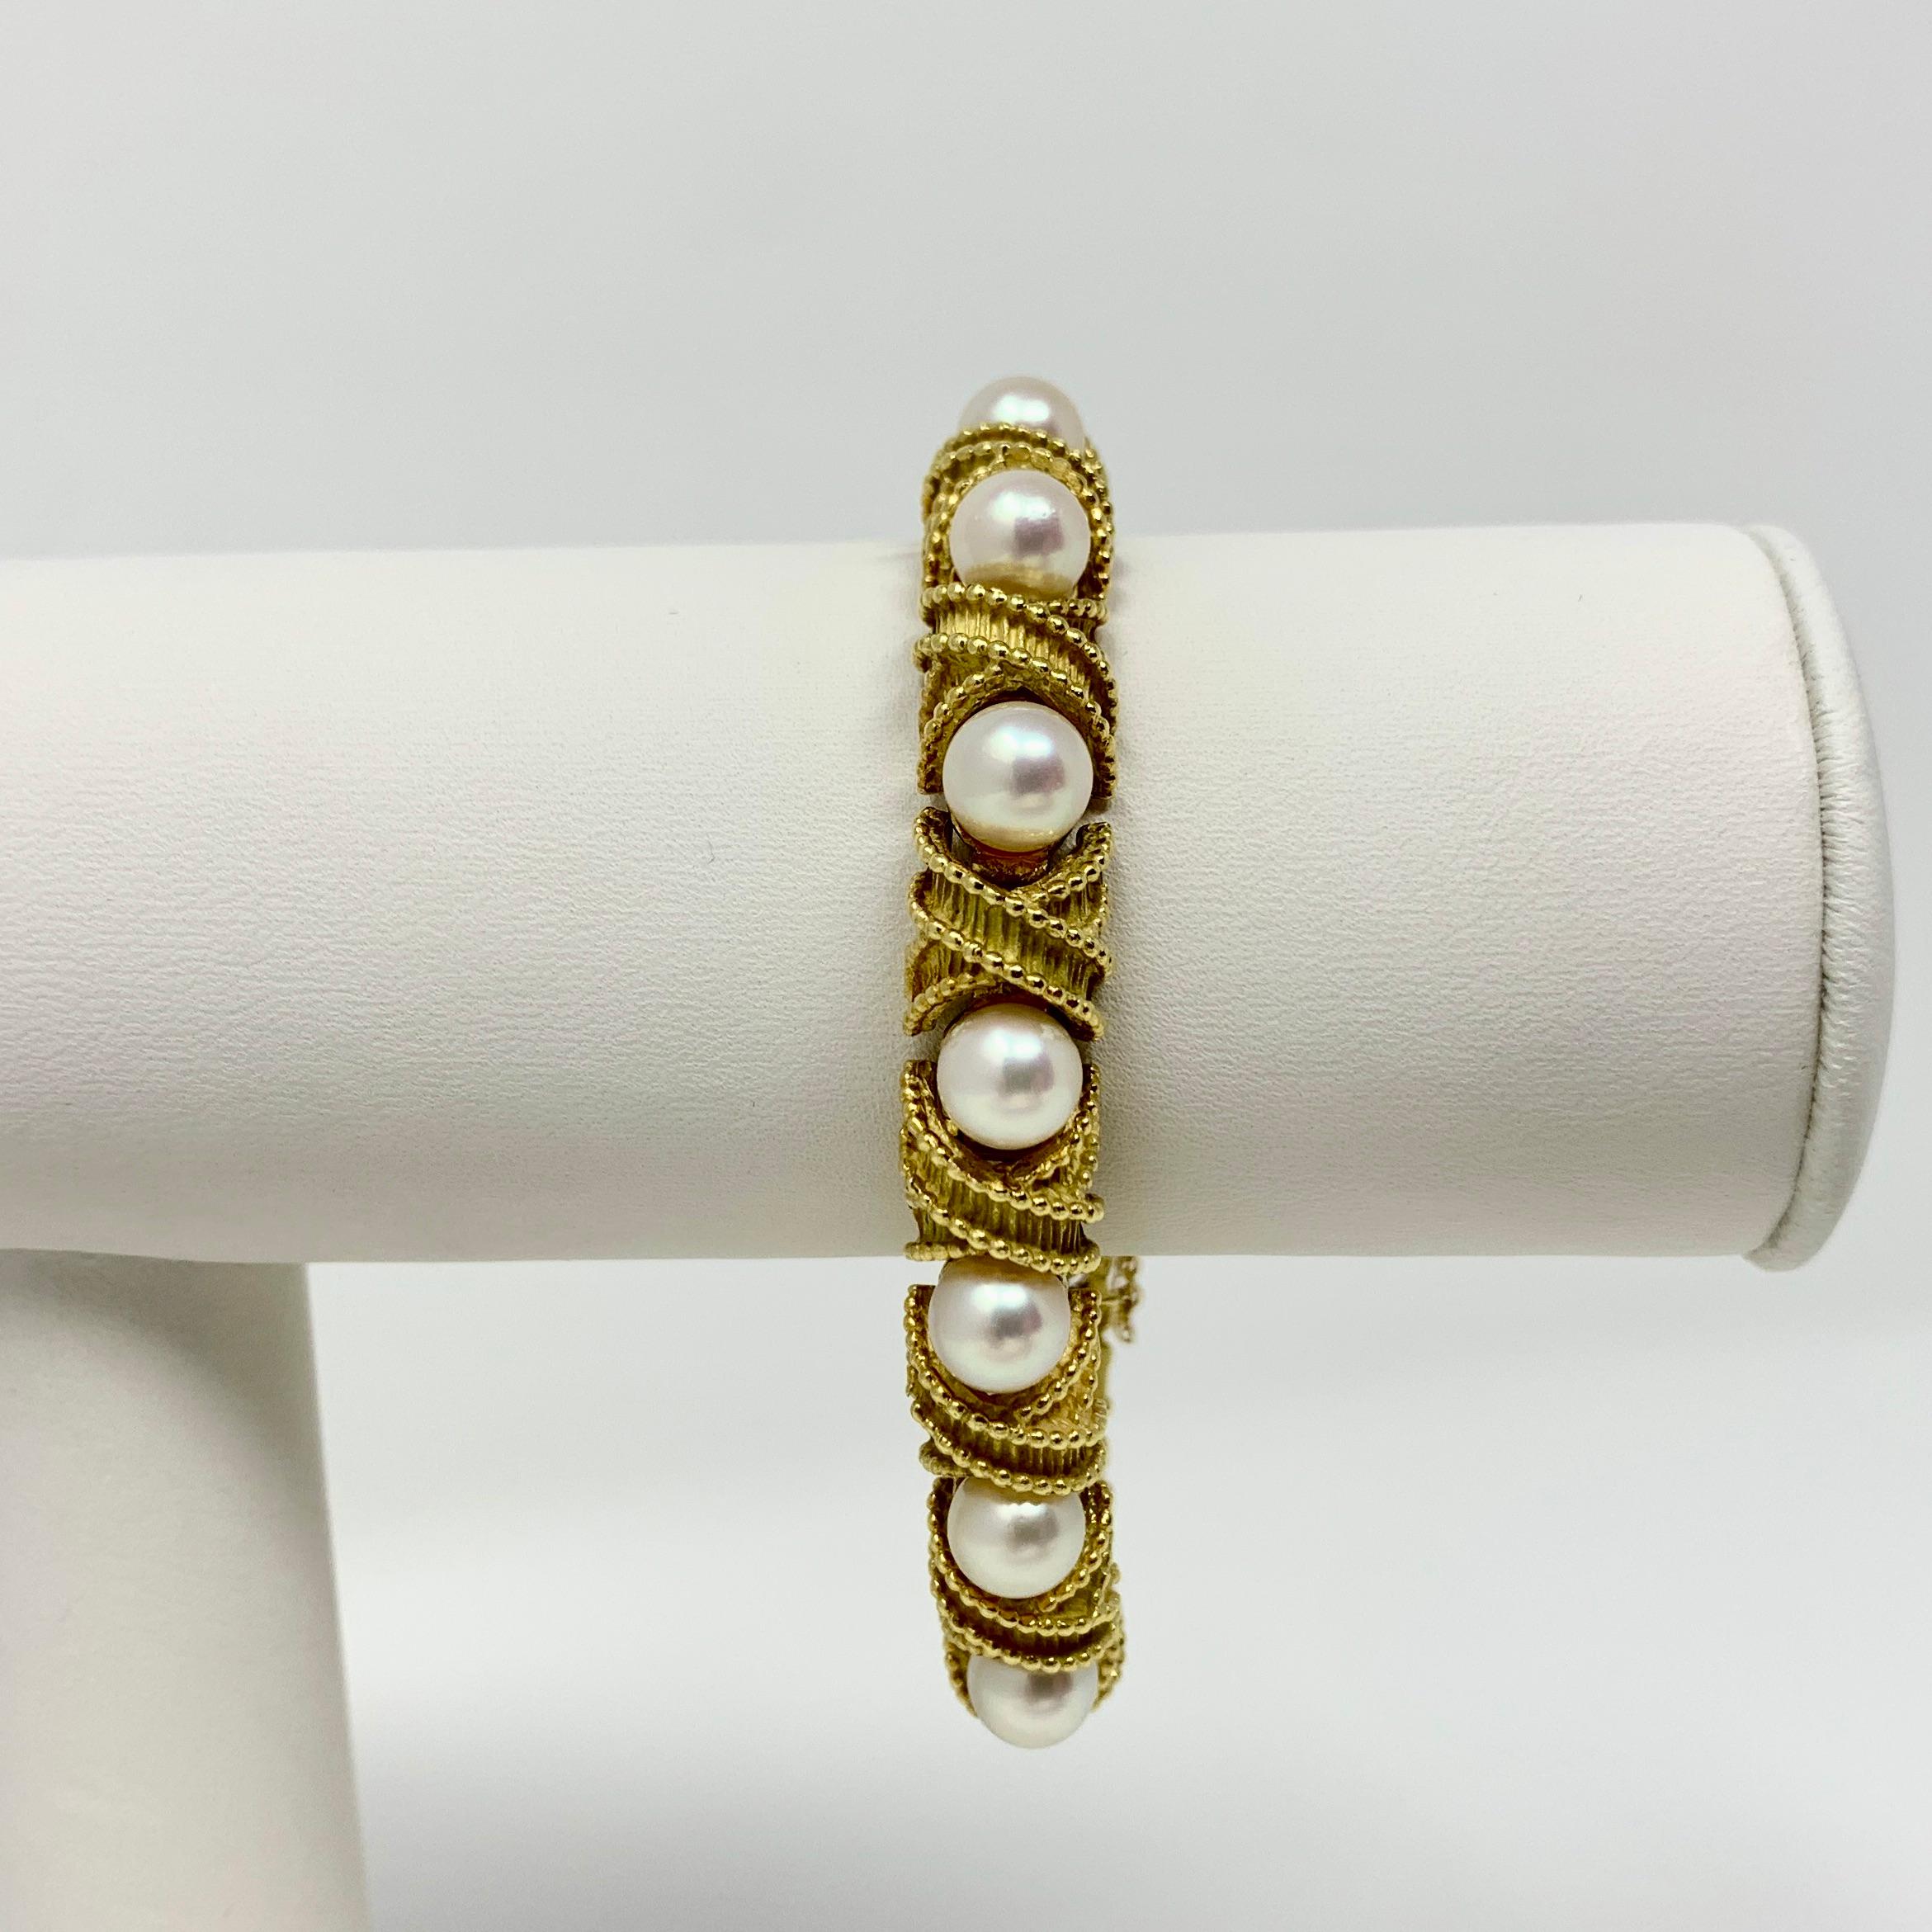 Hammerman Brothers 18k Gold and Pearls Vintage X Link Bracelet 7